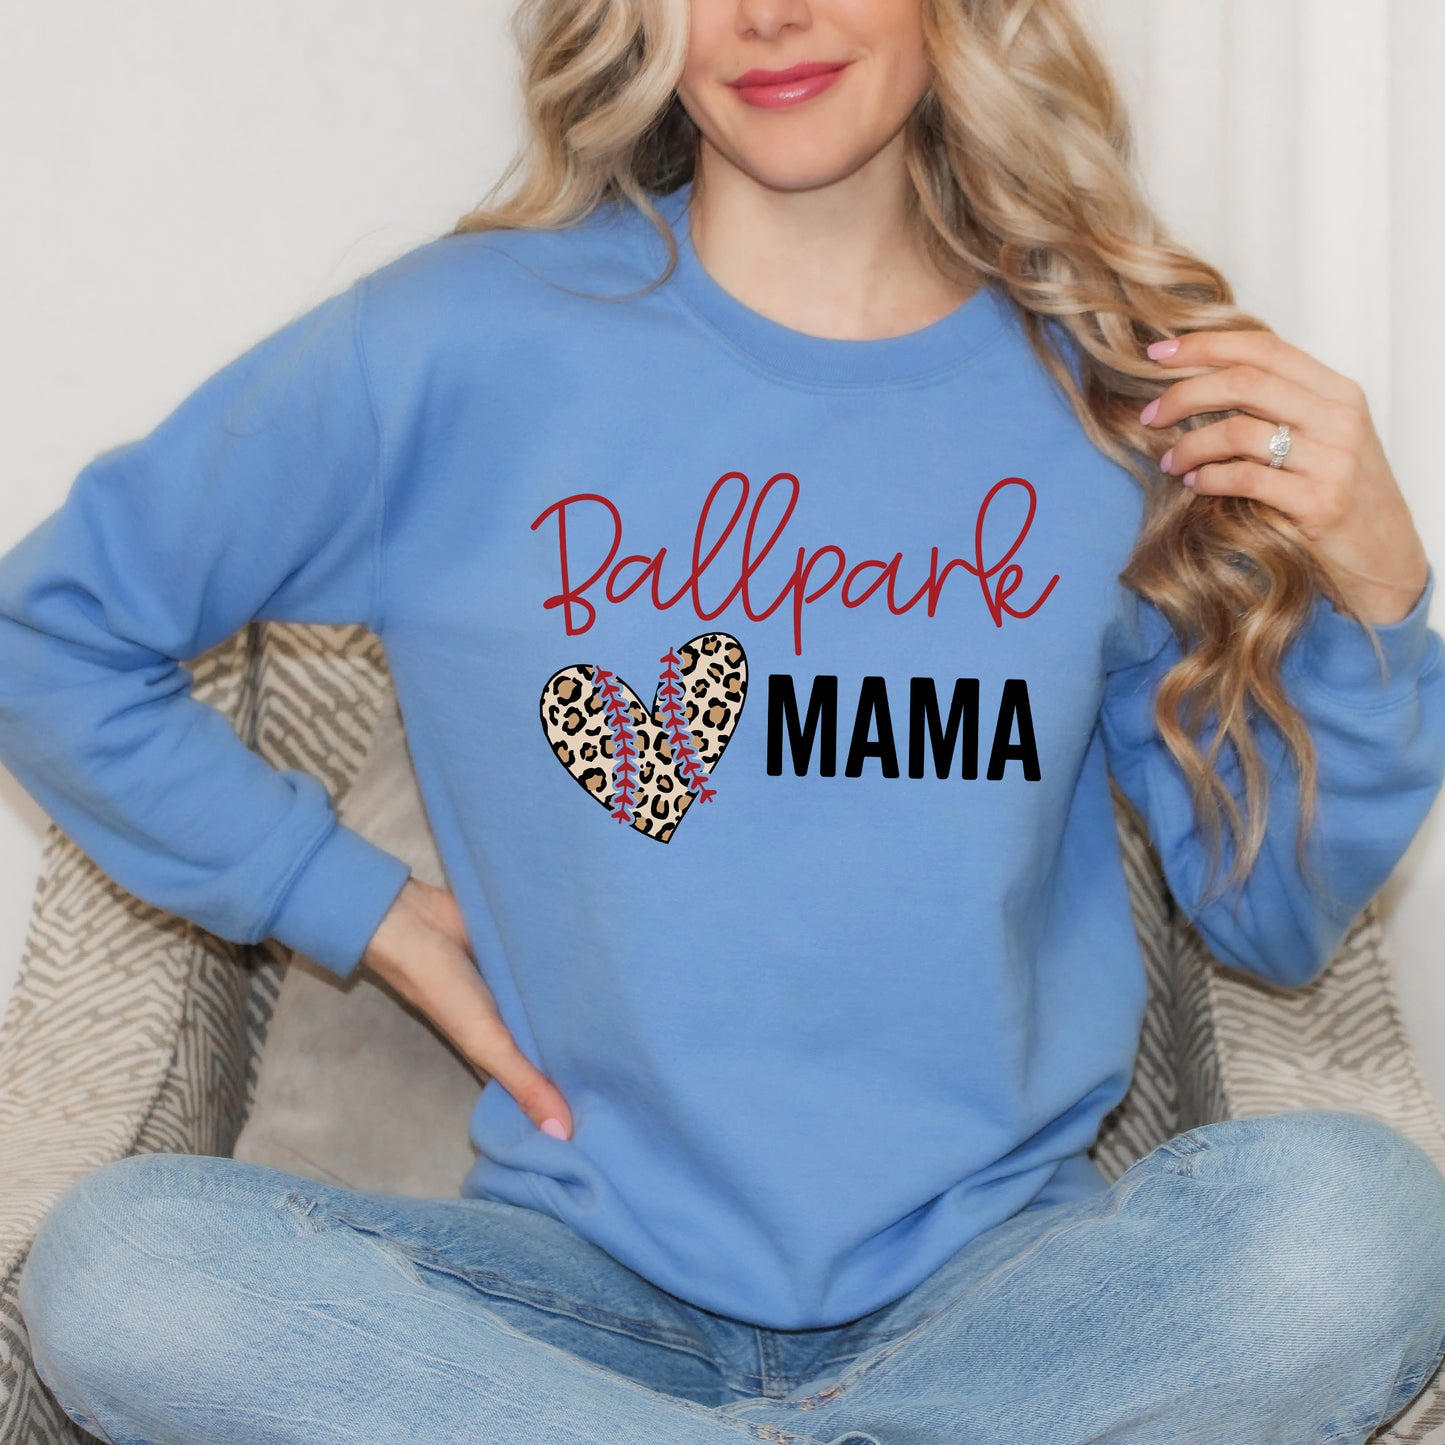 Ballpark Mama | Sweatshirt